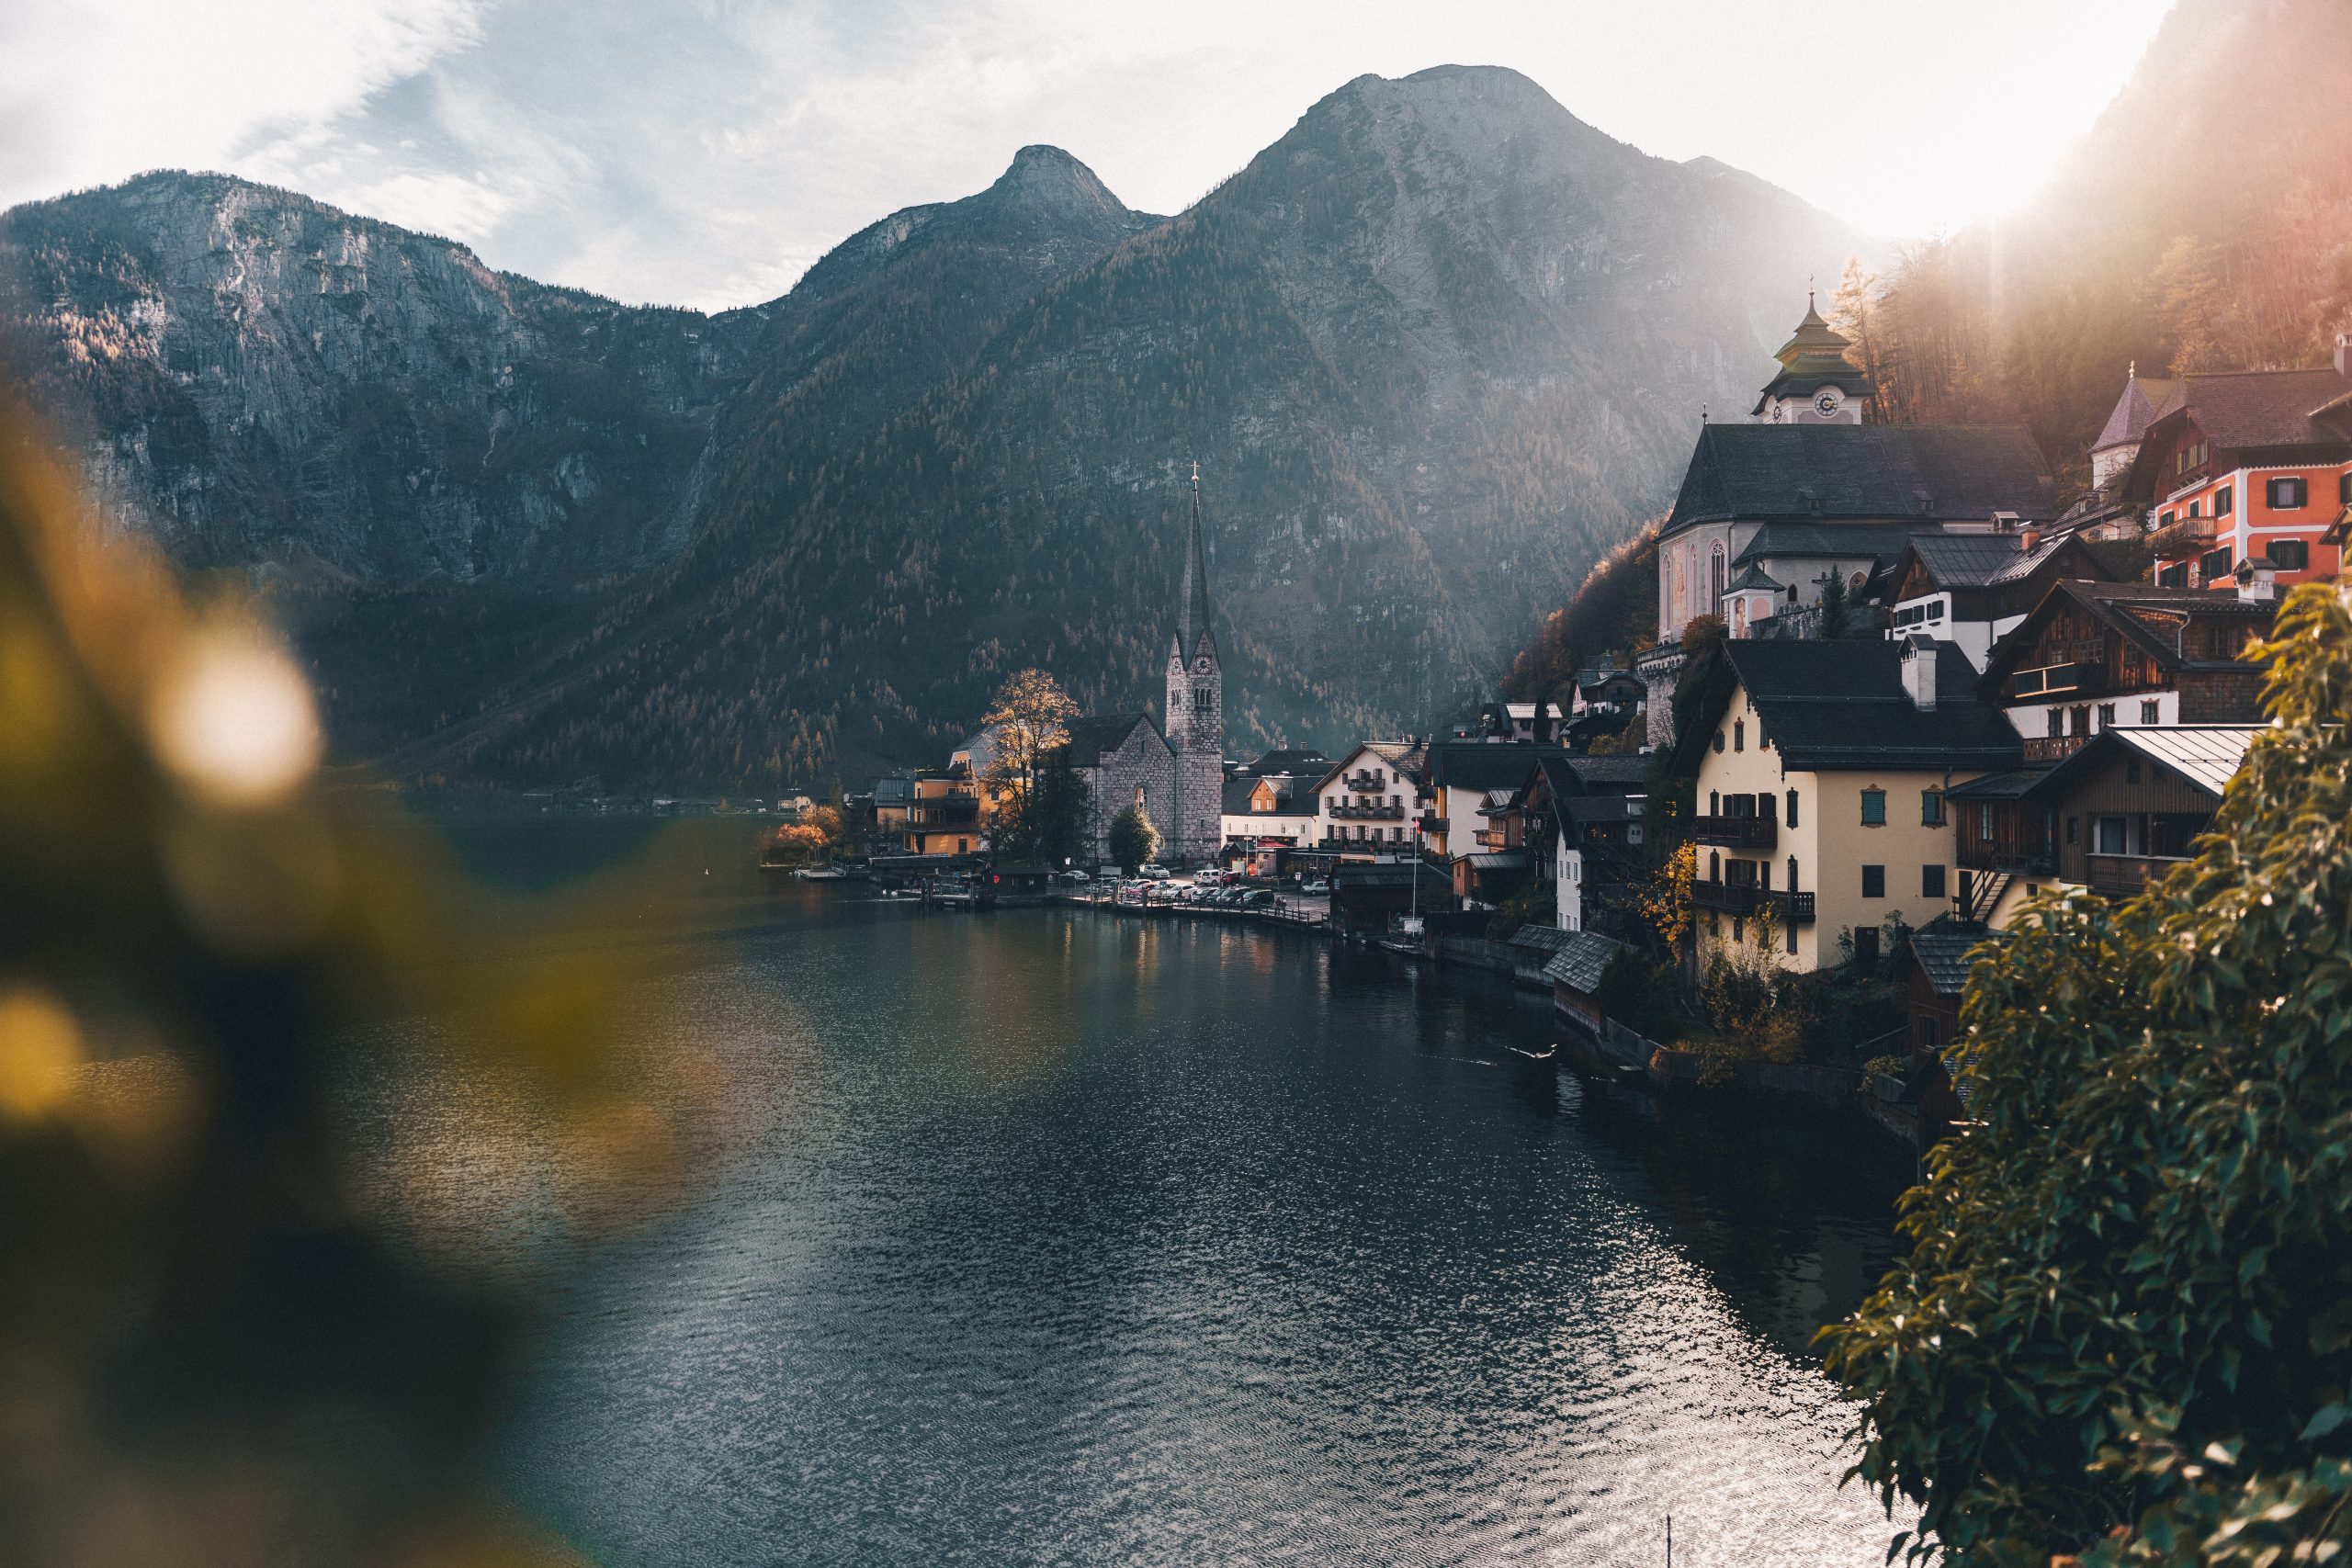 Lake Hallstatt, Austria - Europe's 10 Most Stunning Lakes